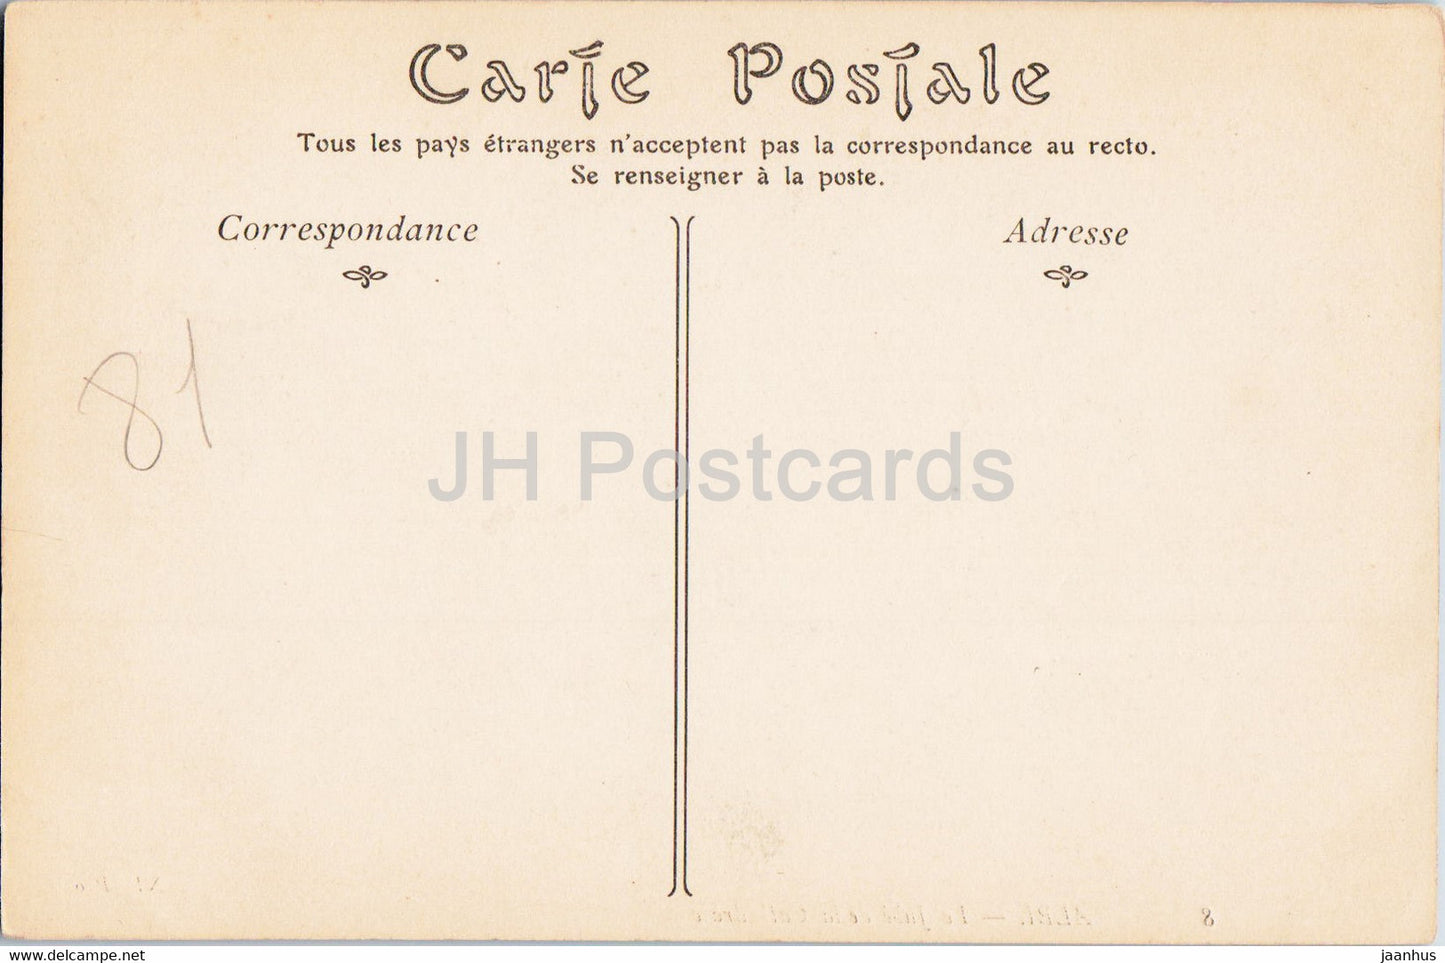 Albi - Le Jube de La Cathedrale - 8 - cathedral - old postcard - France - unused